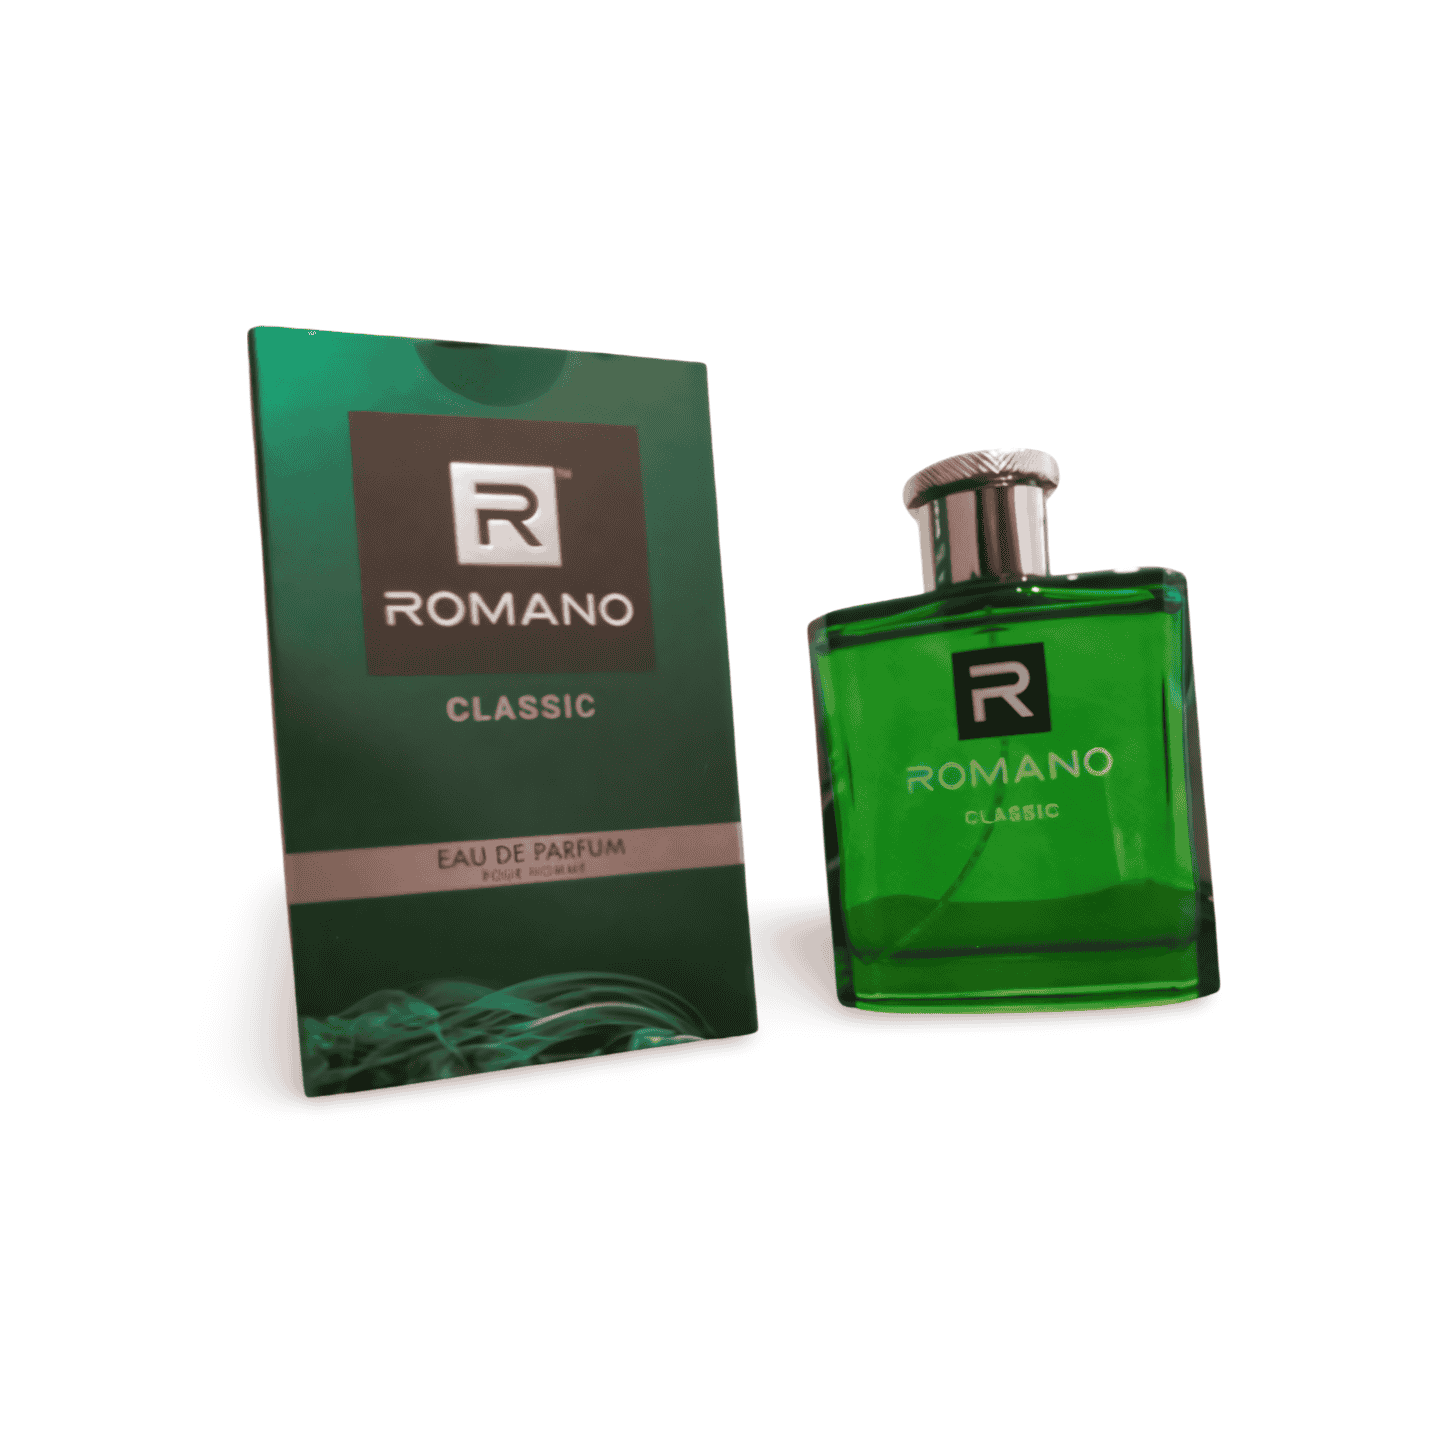 Romano Classic Perfume